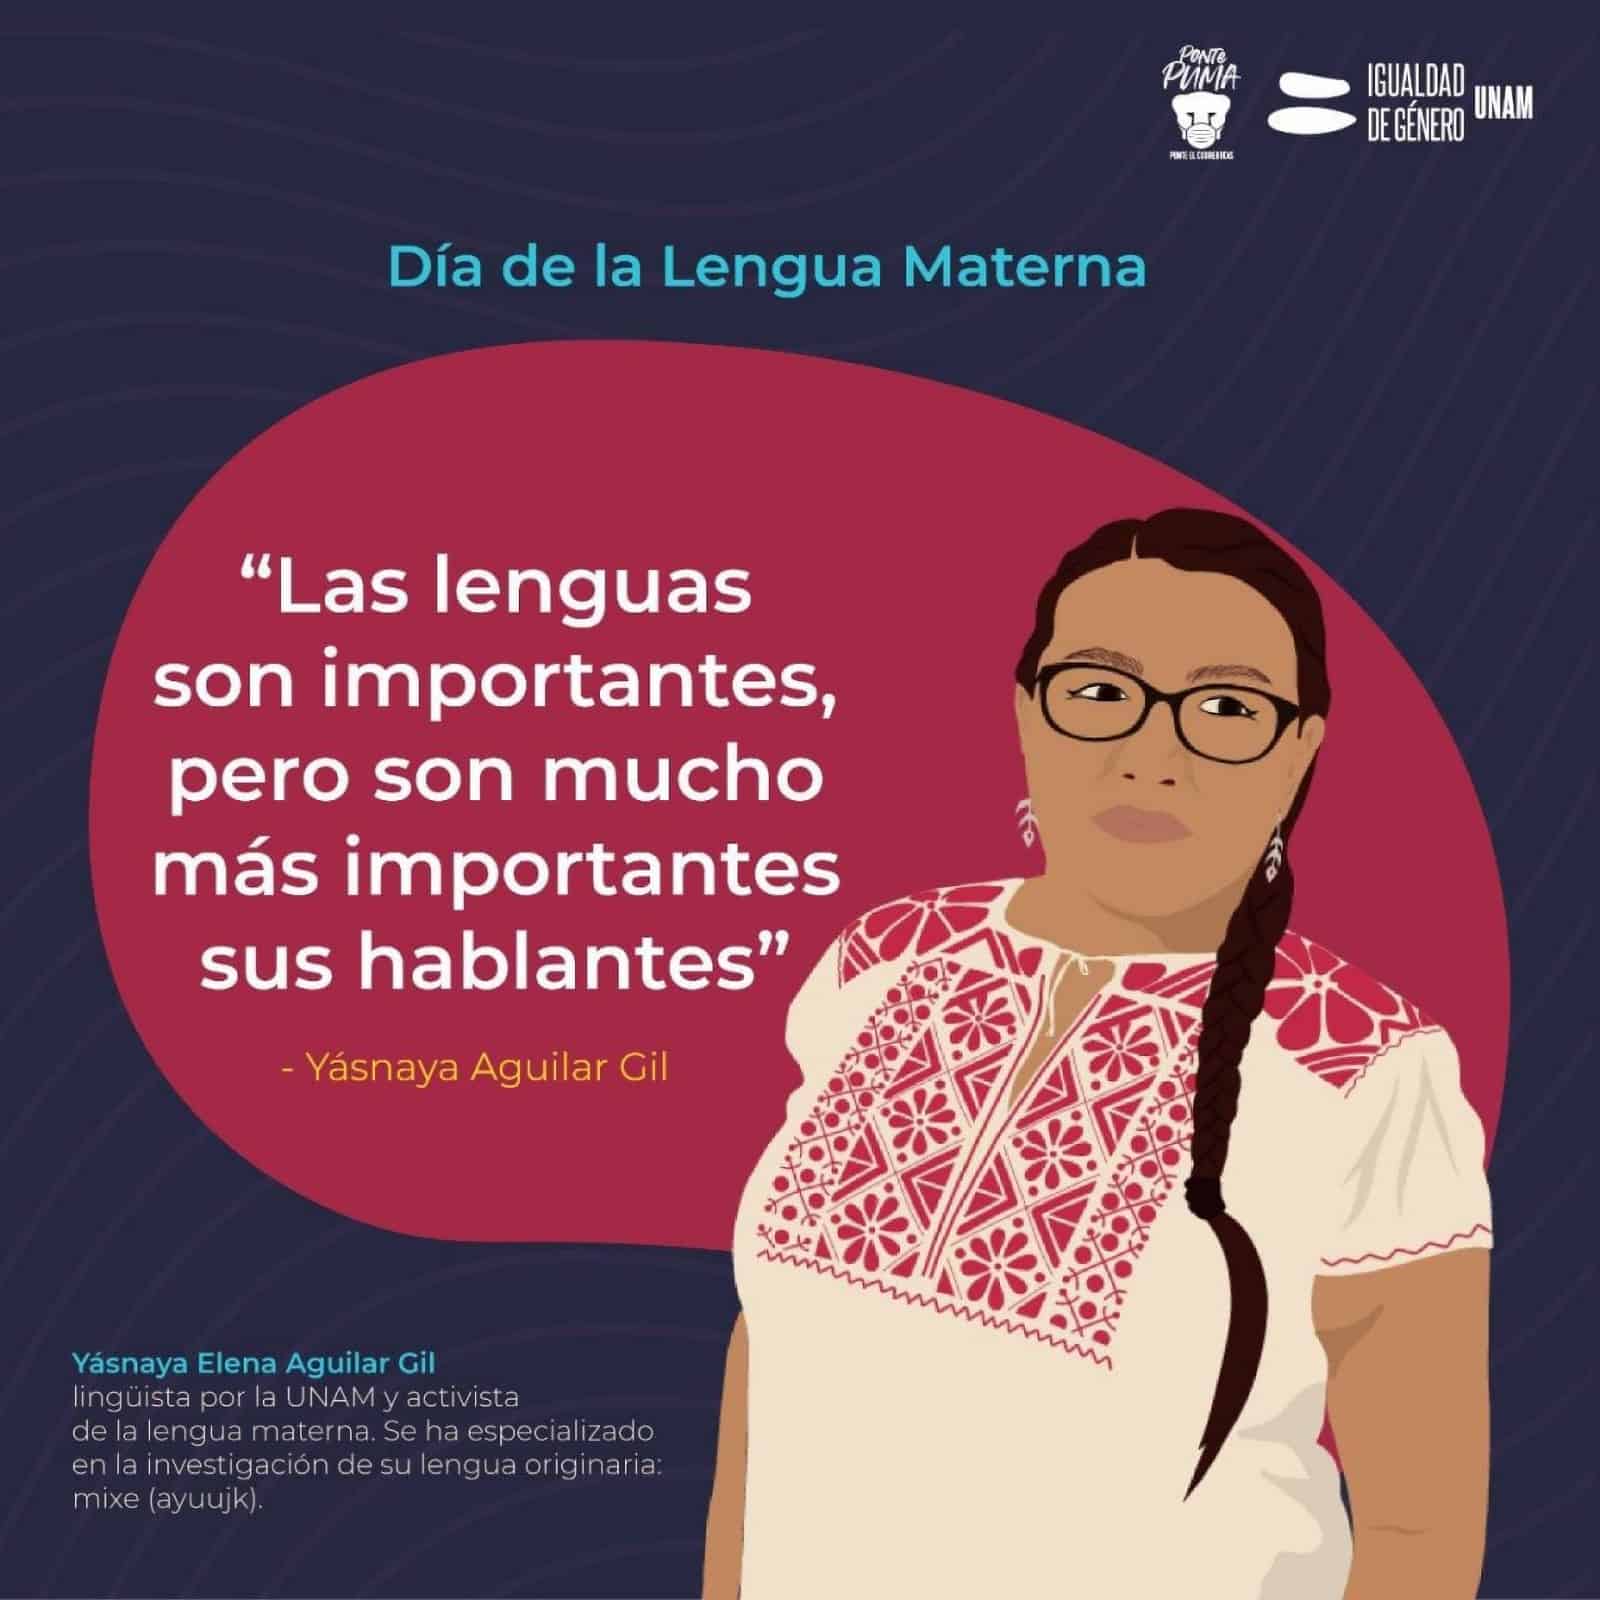 Día internacional de la lengua materna